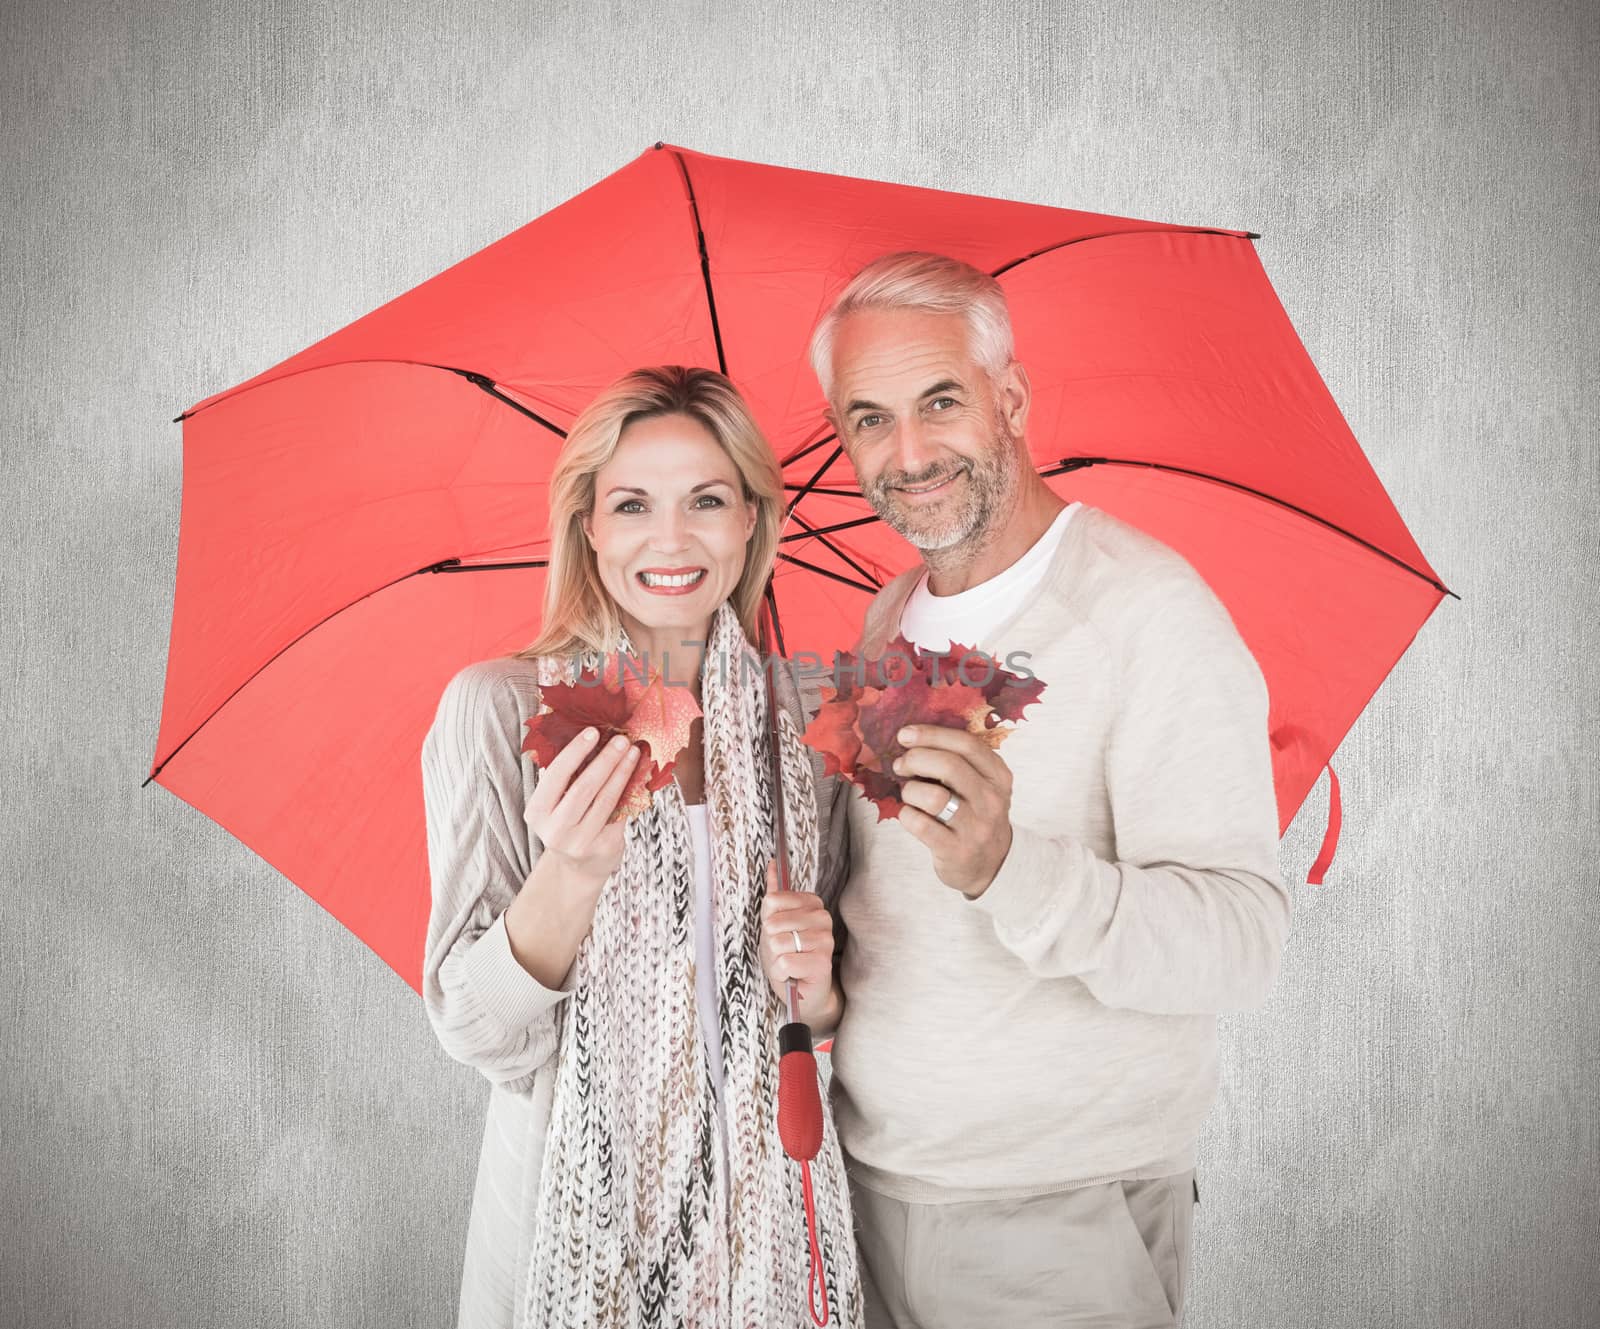 Smiling couple showing autumn leaves under umbrella against white background